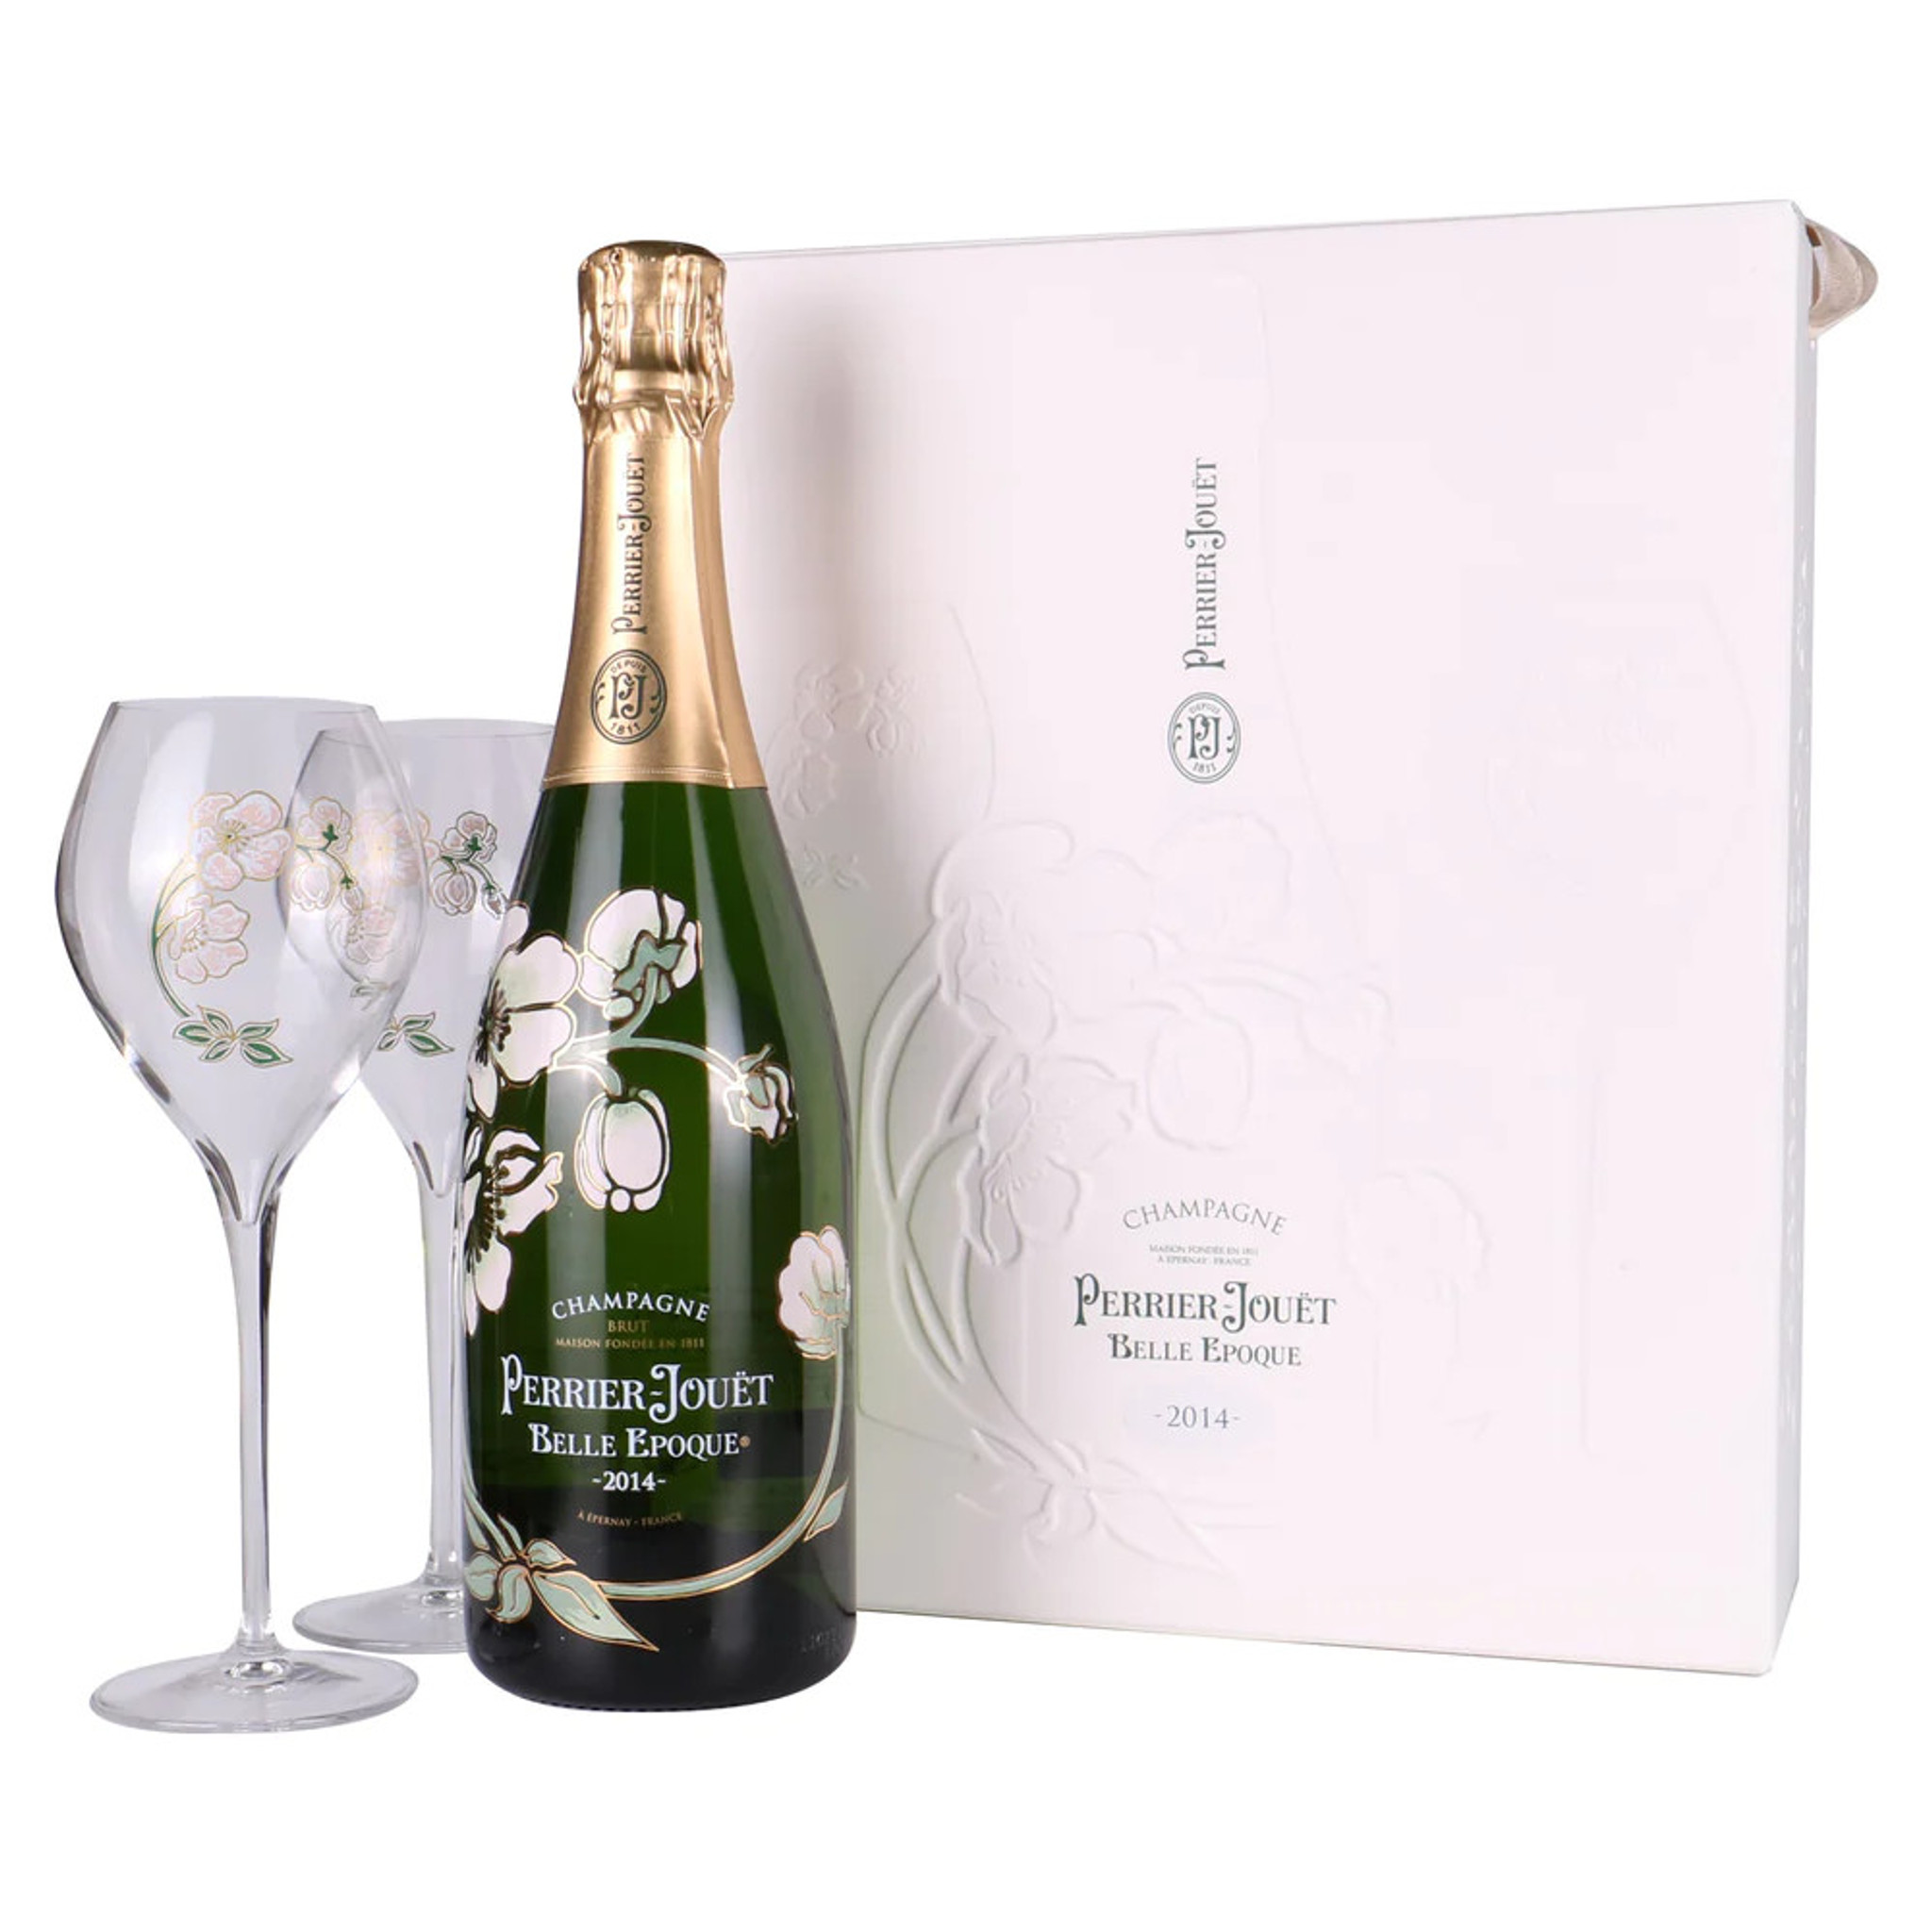 Moet & Chandon Grand Vintage 2015 Bundle - Premier Champagne